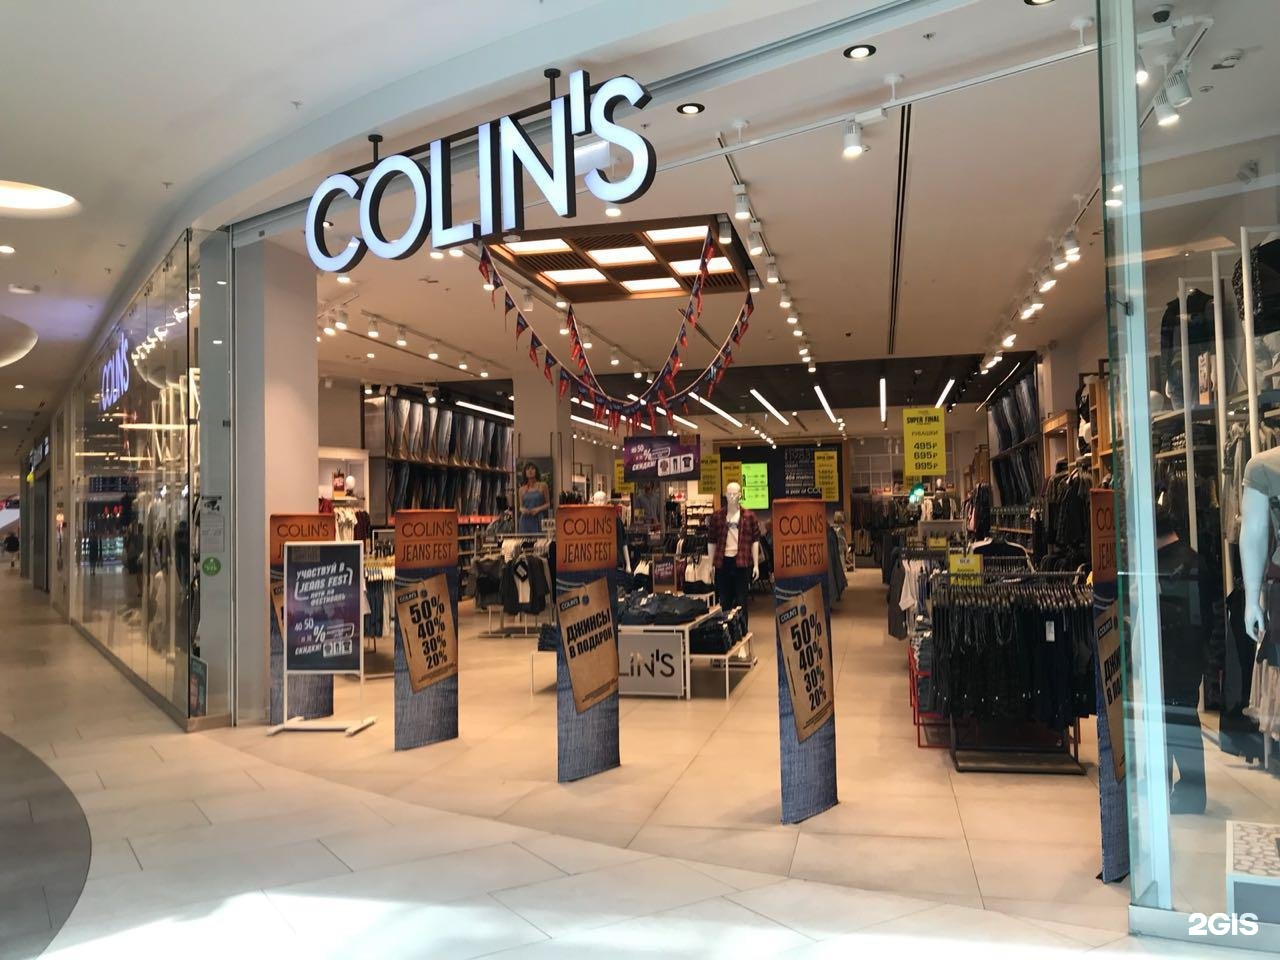 Colin s интернет магазин. Коллинз магазин. ТЦ город Colins. Colin s Метрополис. Colins Метрополис этаж.